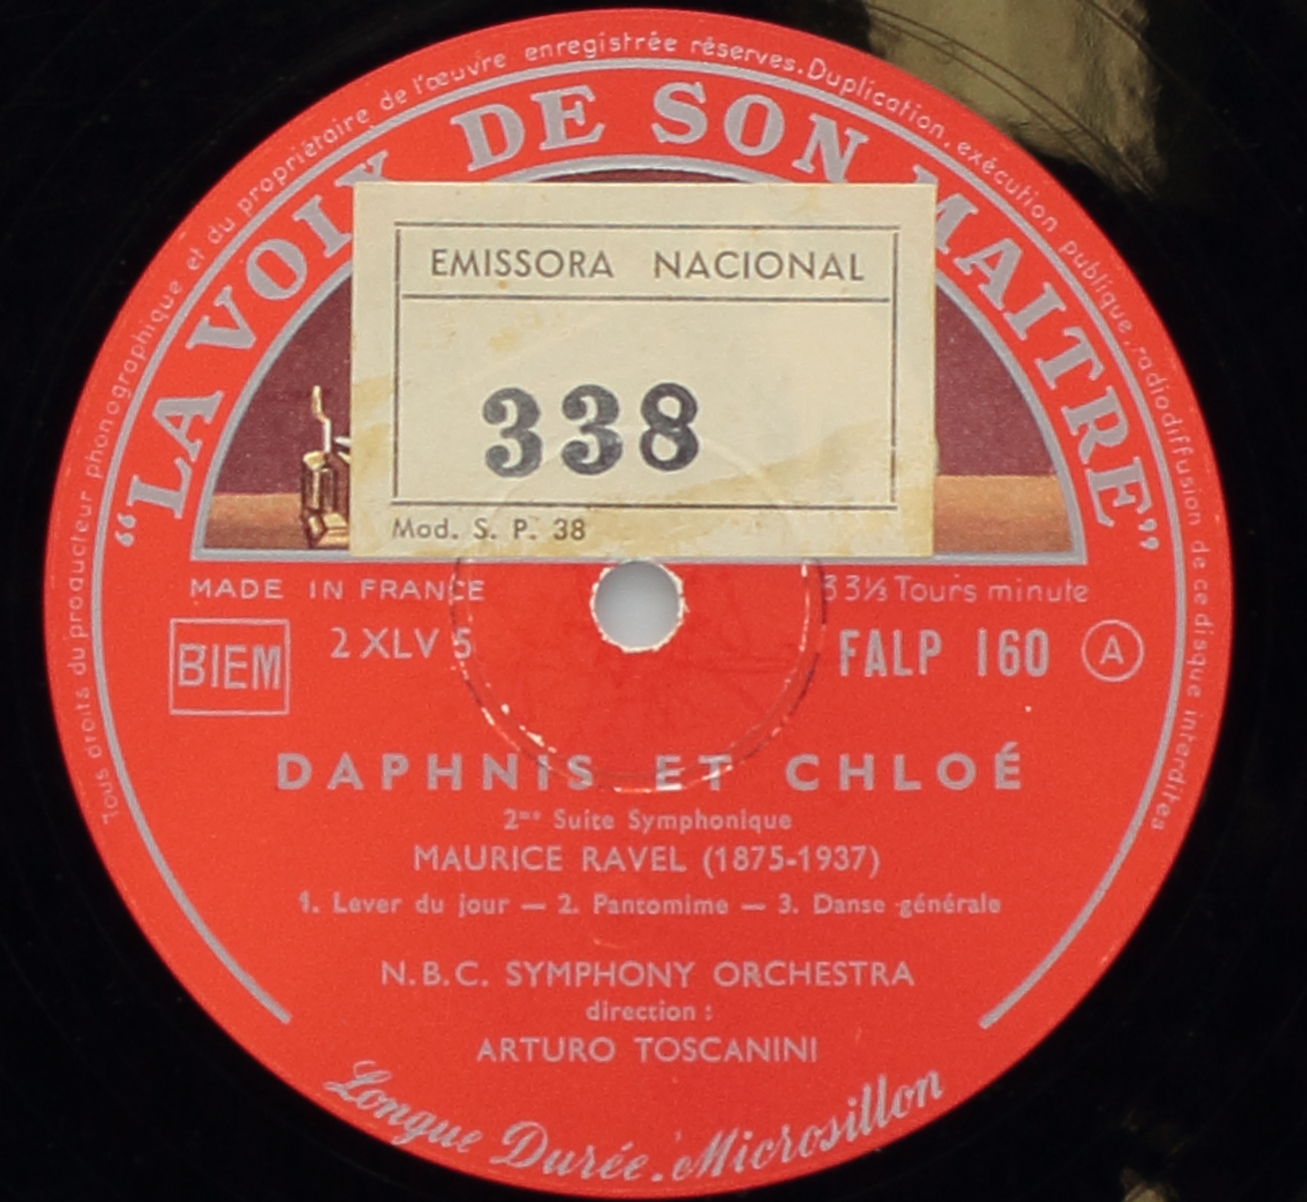 Debussy: La Mer / Ravel: Daphnis et Chloé